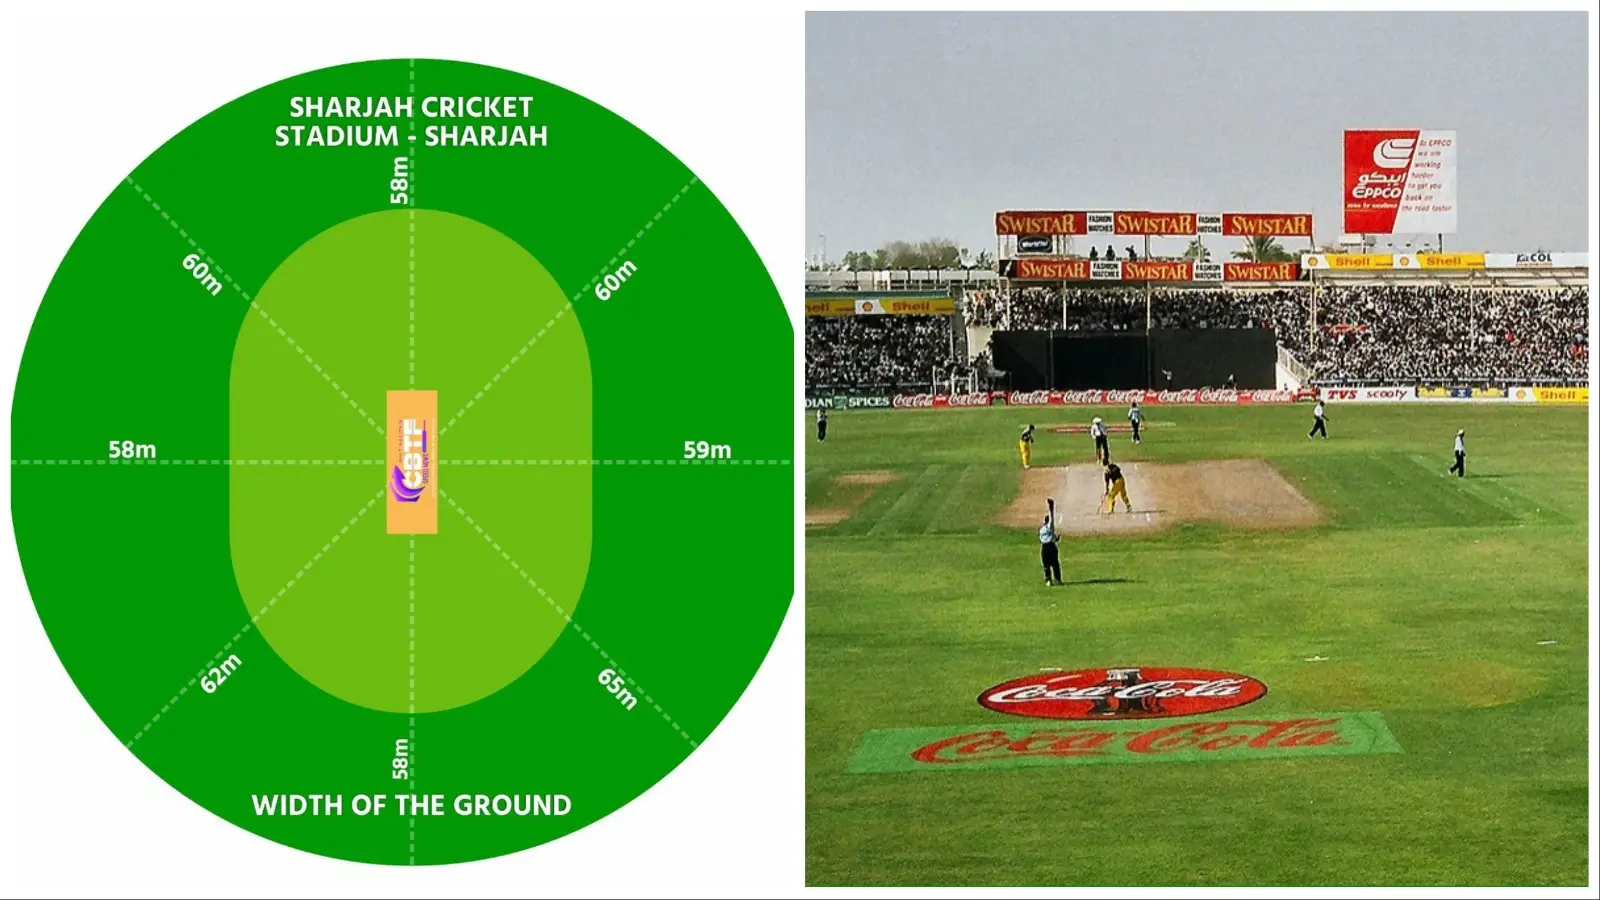 Sharjah Cricket Ground Boundary Length and Seating Capacity